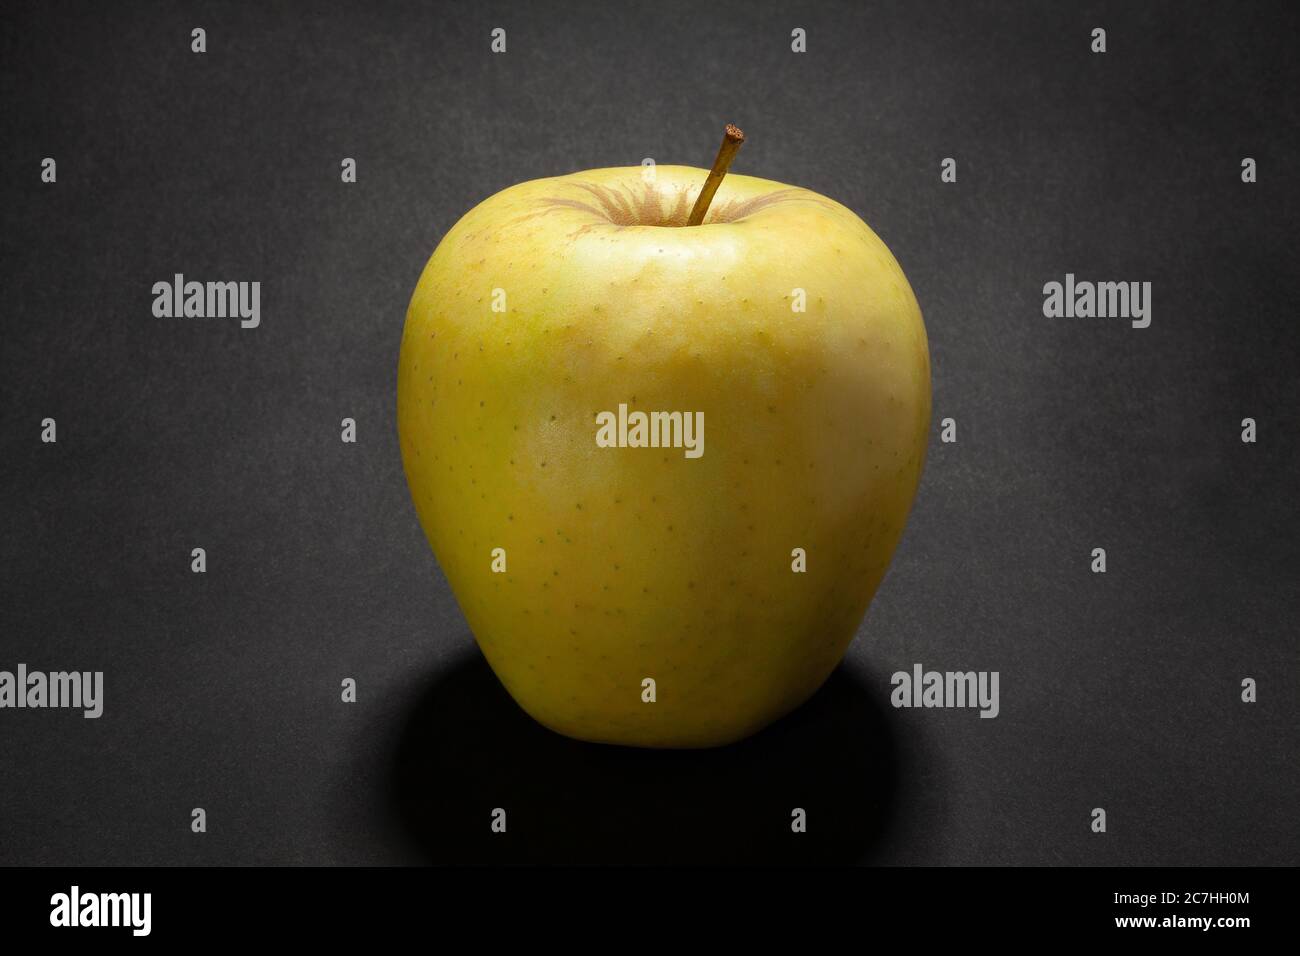 golden delicious apple on black background Stock Photo